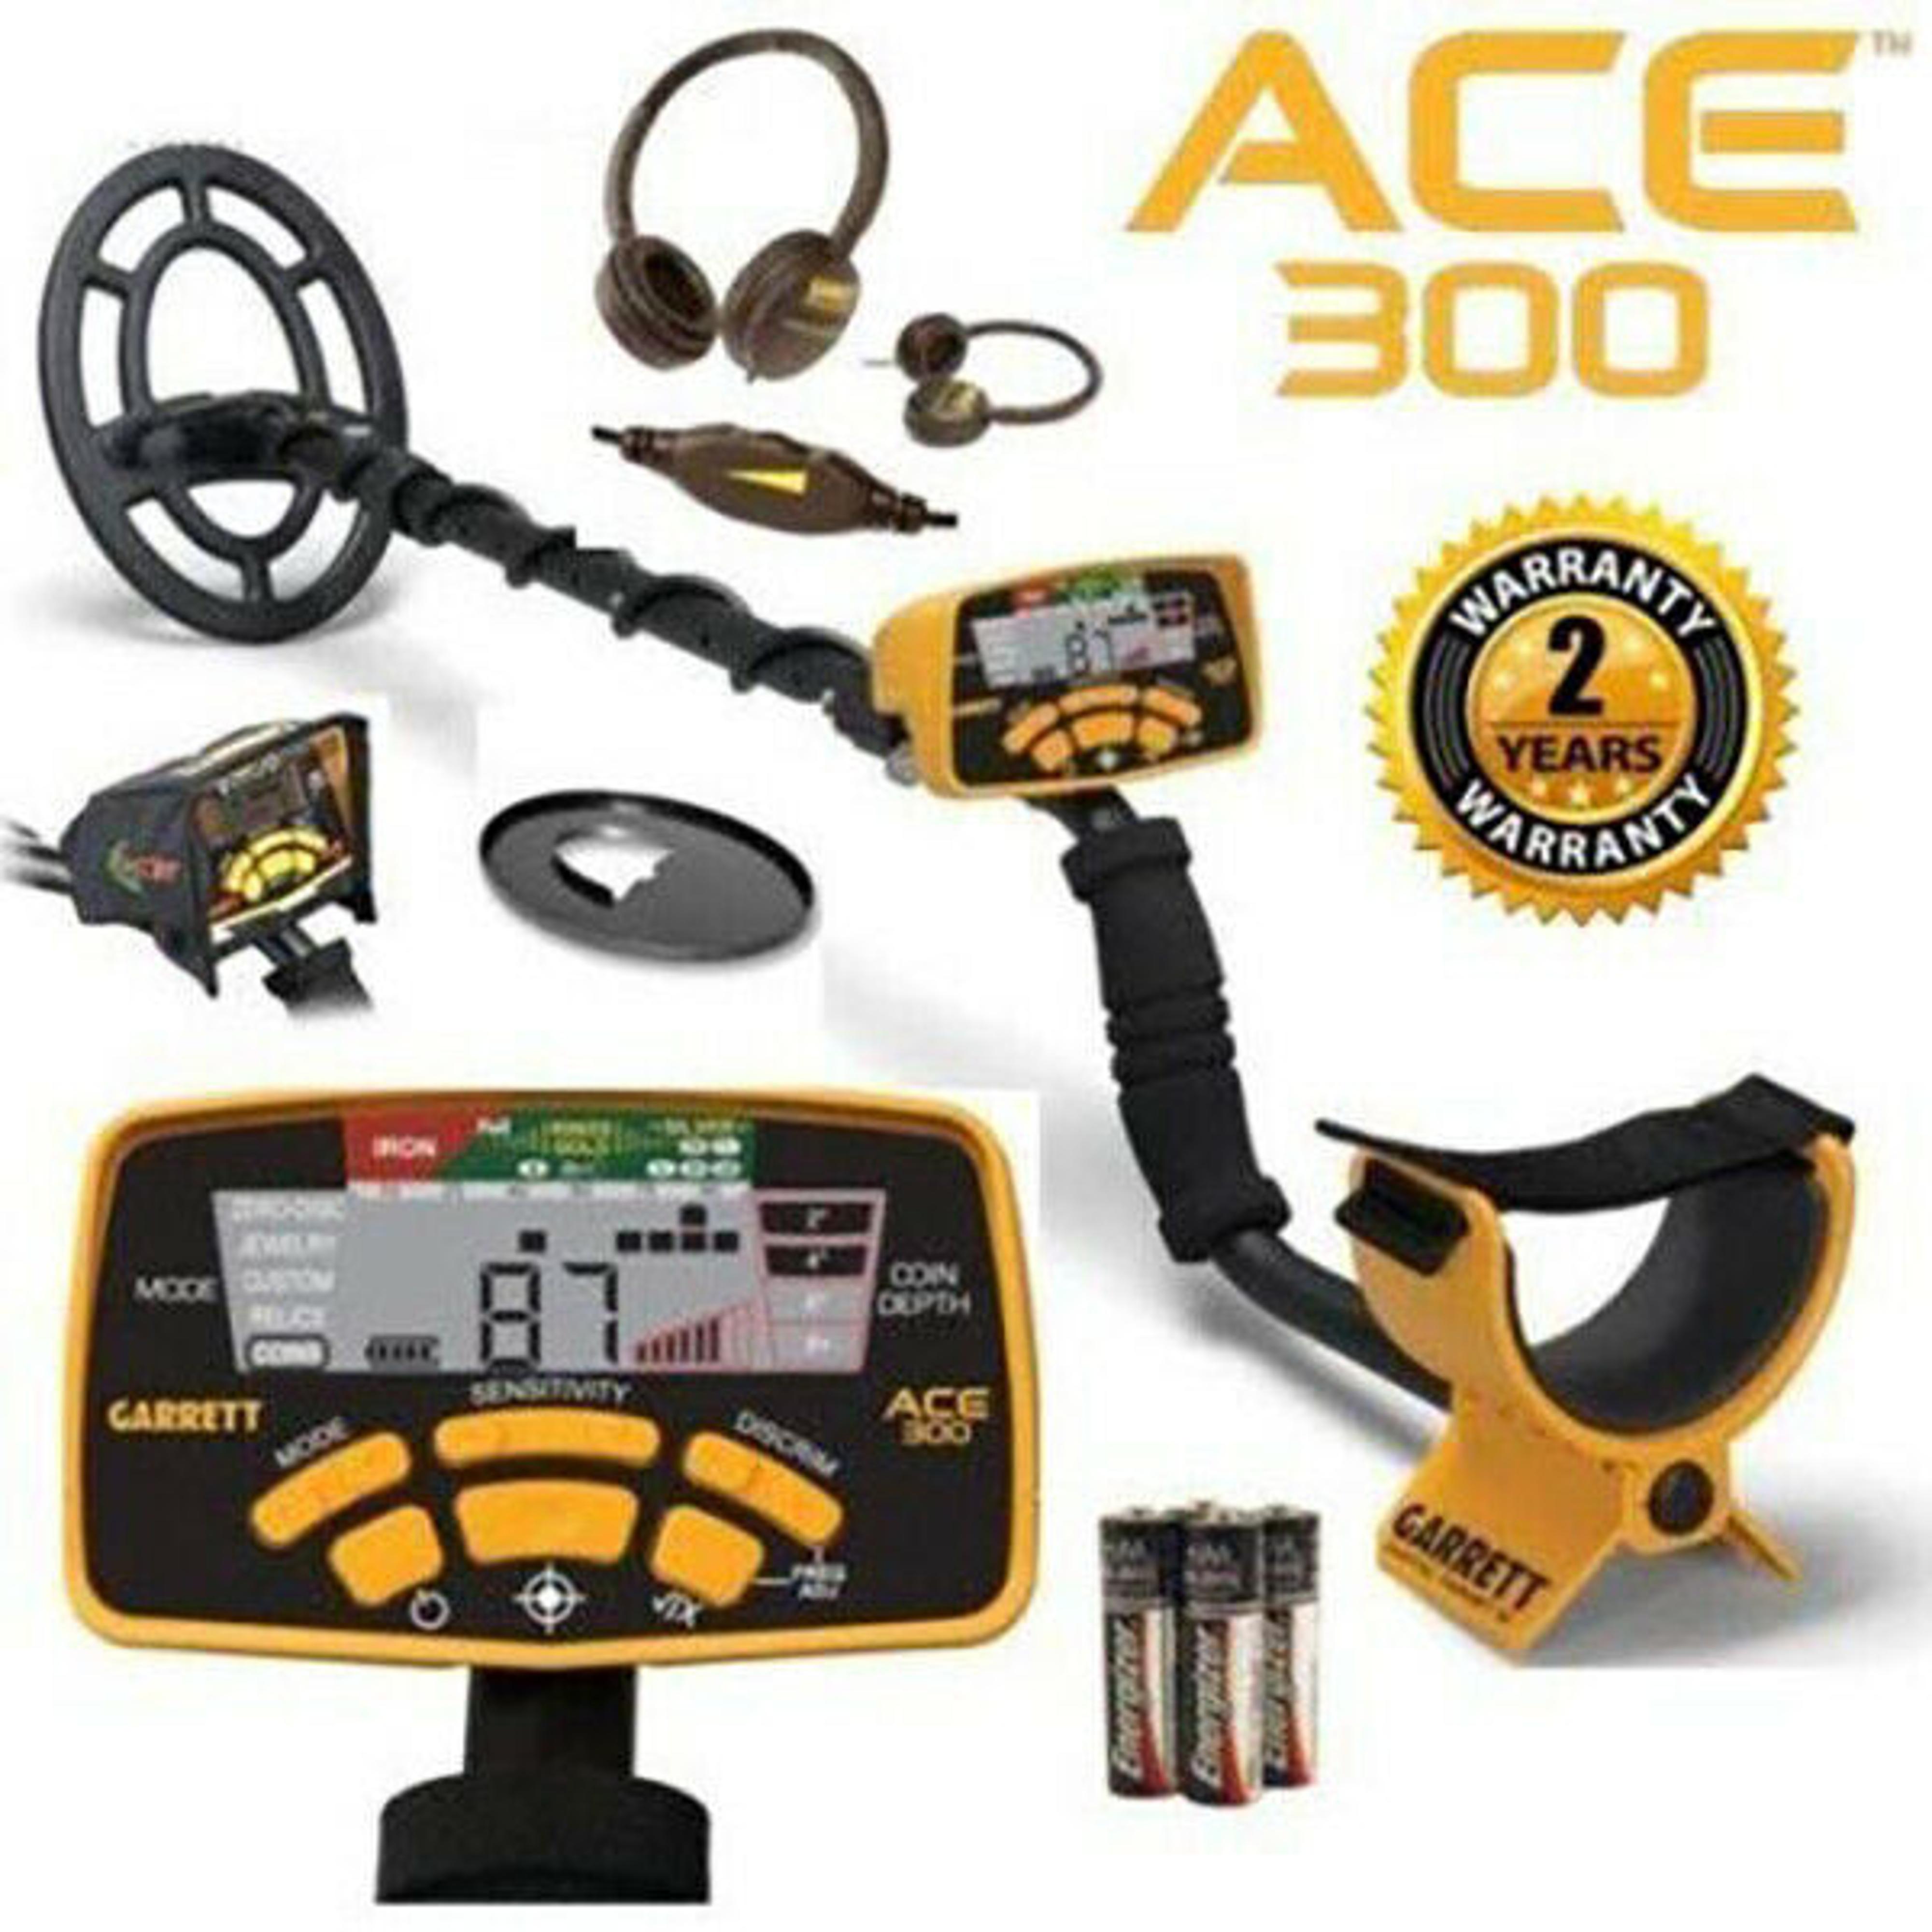 ACE 300 Metal Detector